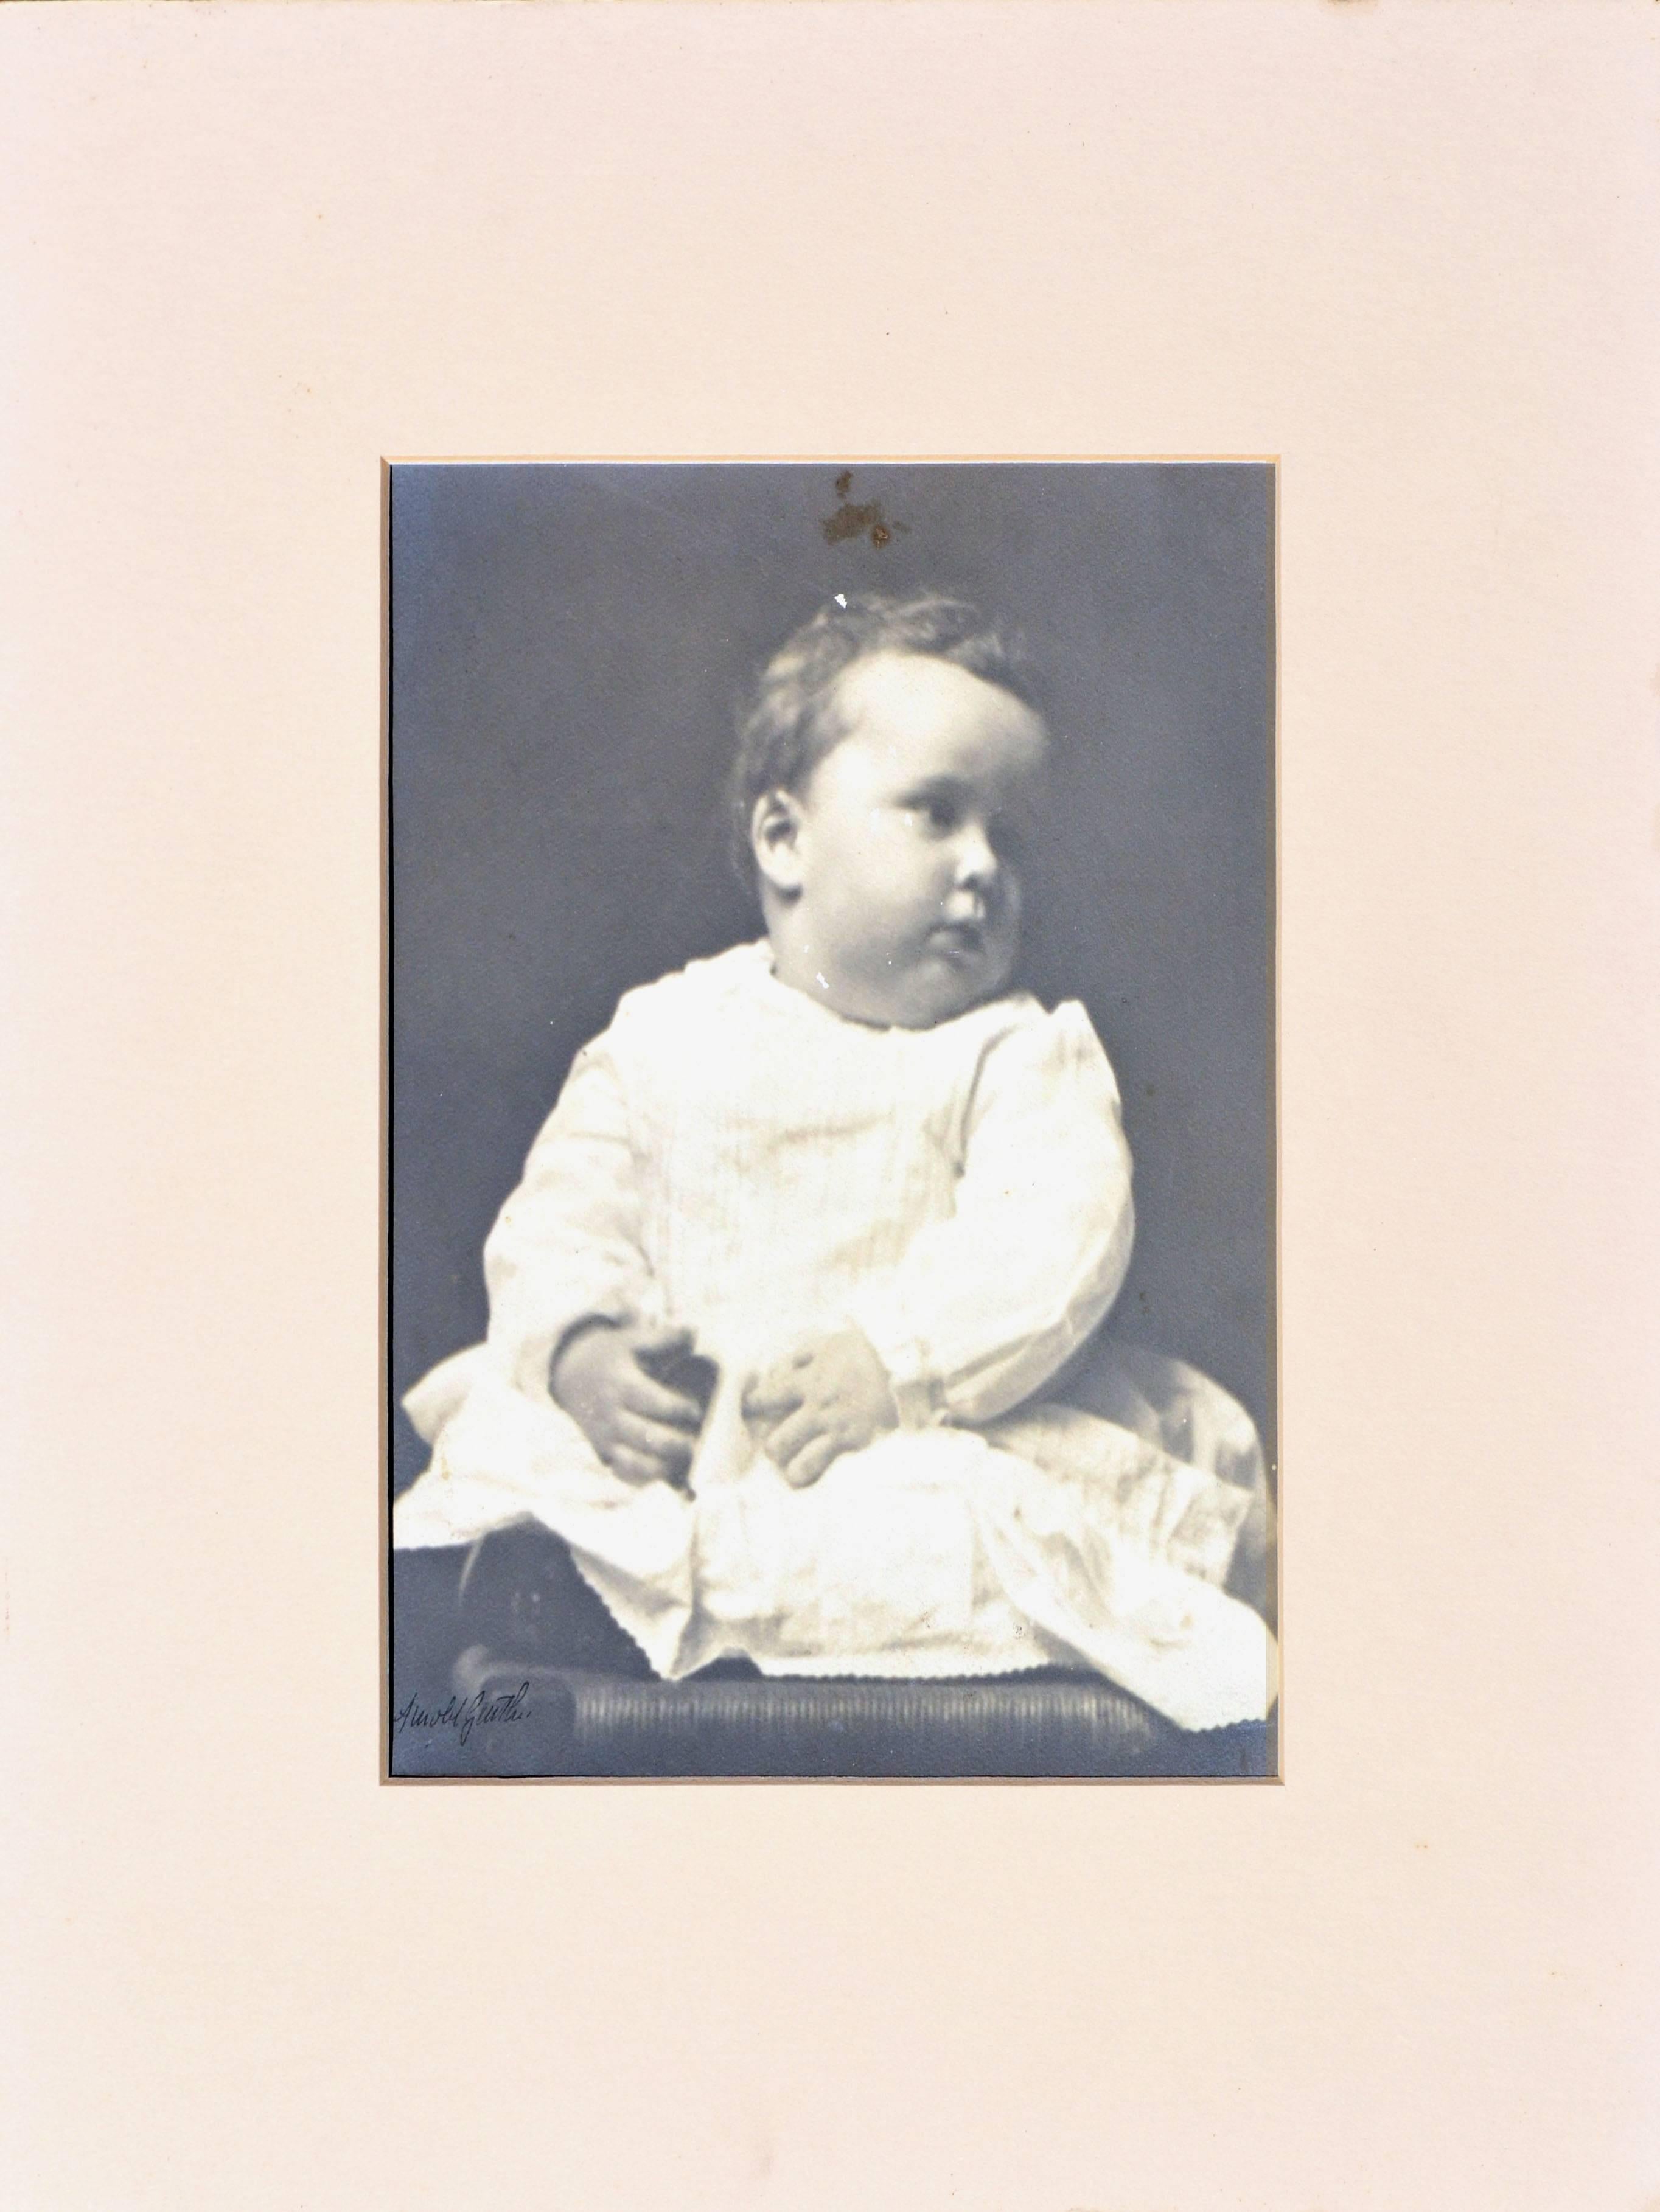 The Poet's Son Billie 1898 